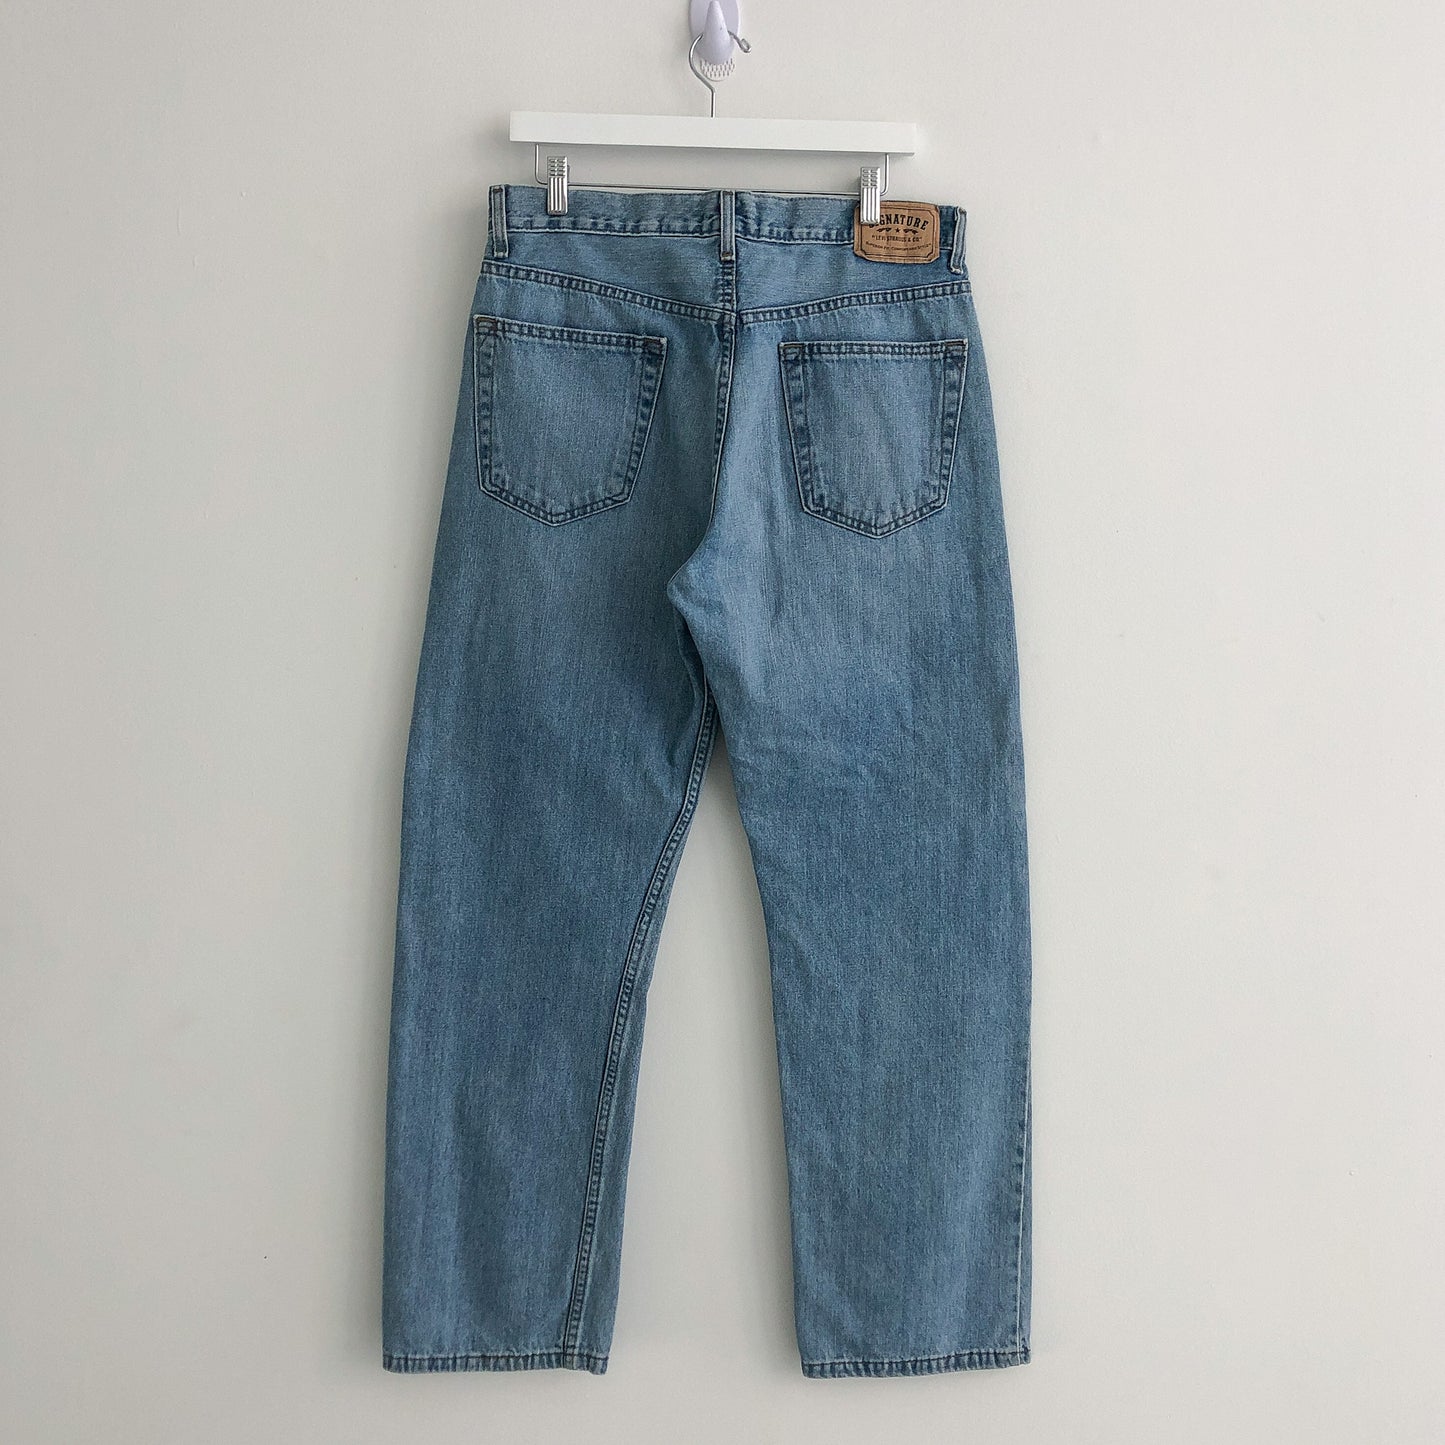 Levi's Signature Light Wash Denim Jeans